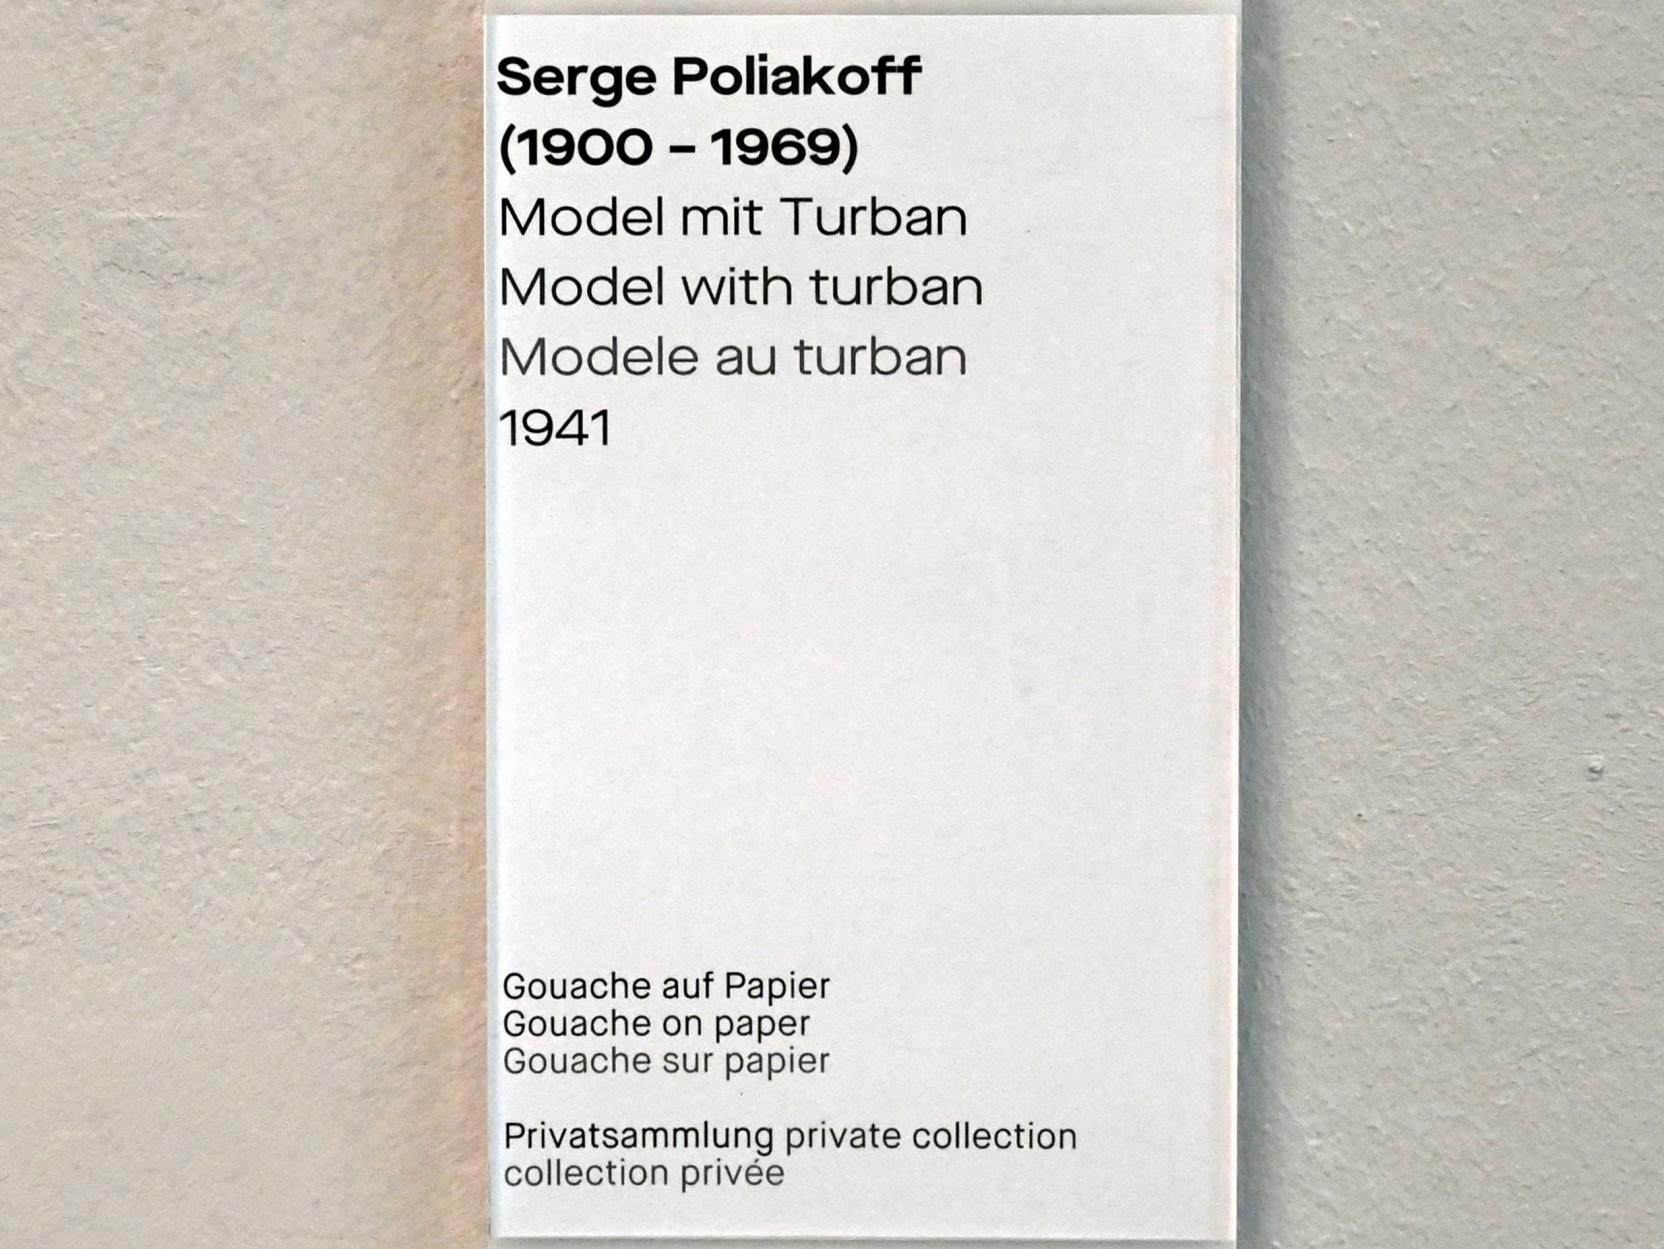 Serge Poliakoff (1936–1968), Model mit Turban, Chemnitz, Museum Gunzenhauser, Saal 2.3 - Serge Poliakoff, 1941, Bild 2/2